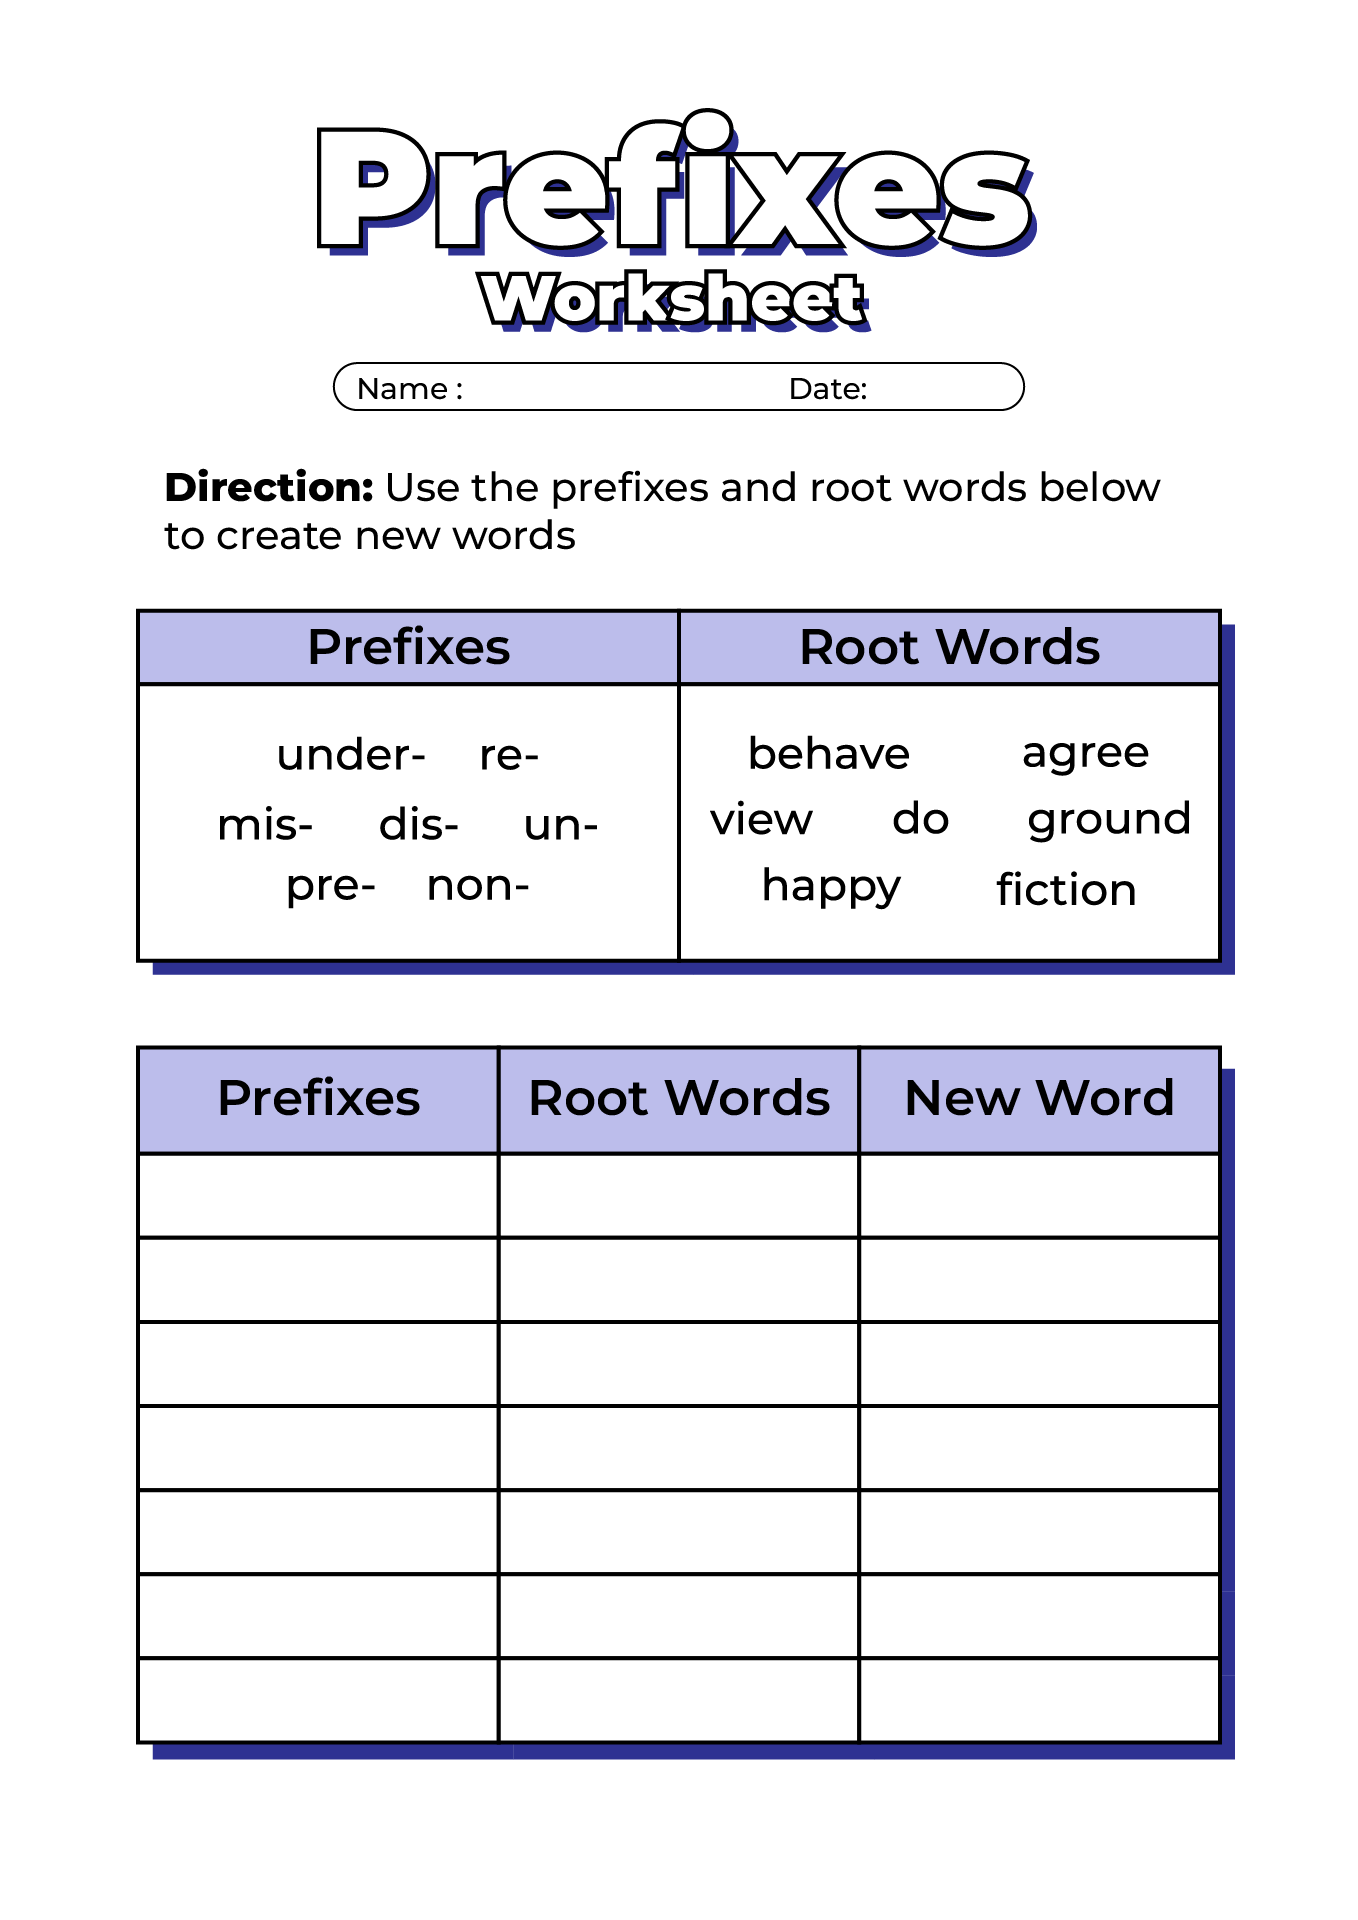 Prefix and Suffix Worksheet 5th Grade